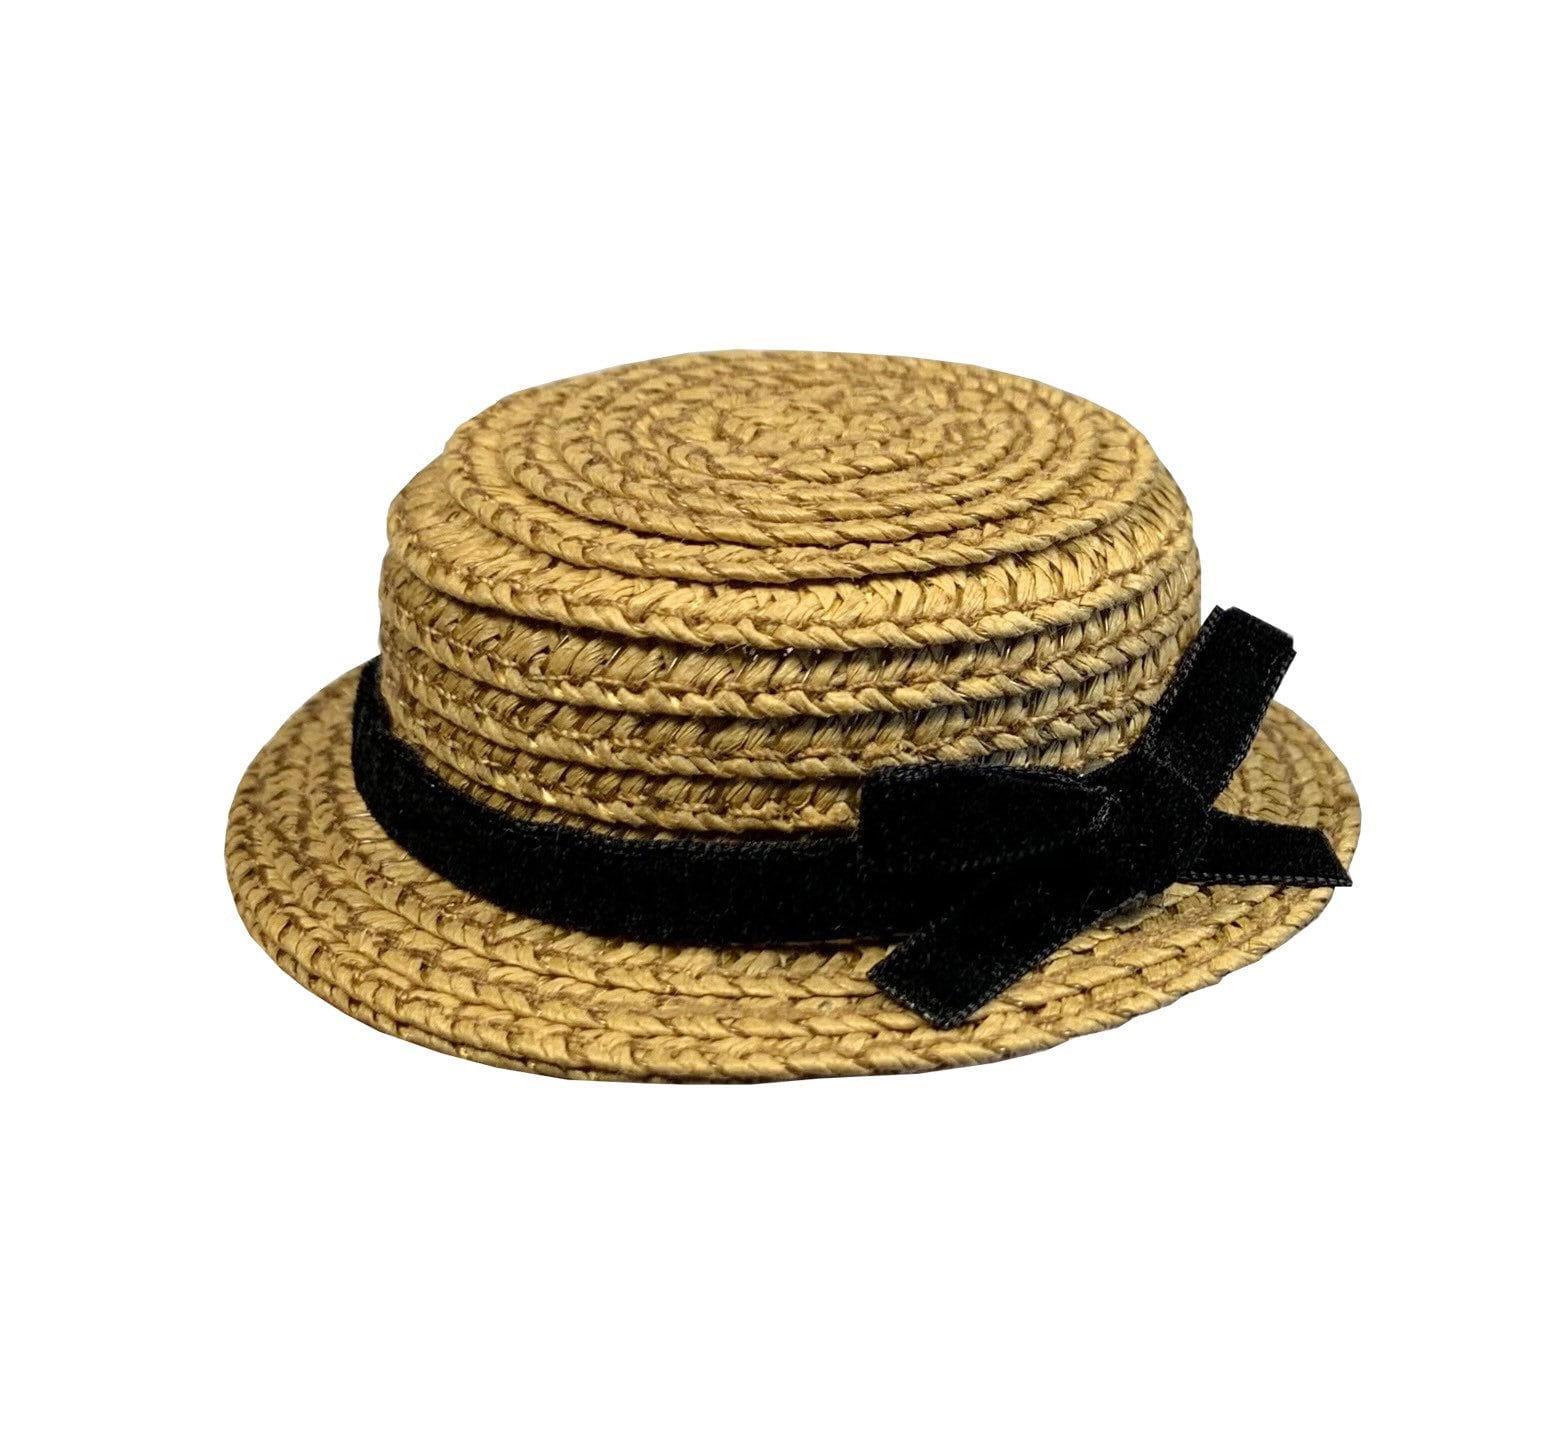 Cute Straw Hat Design - Pet Clever